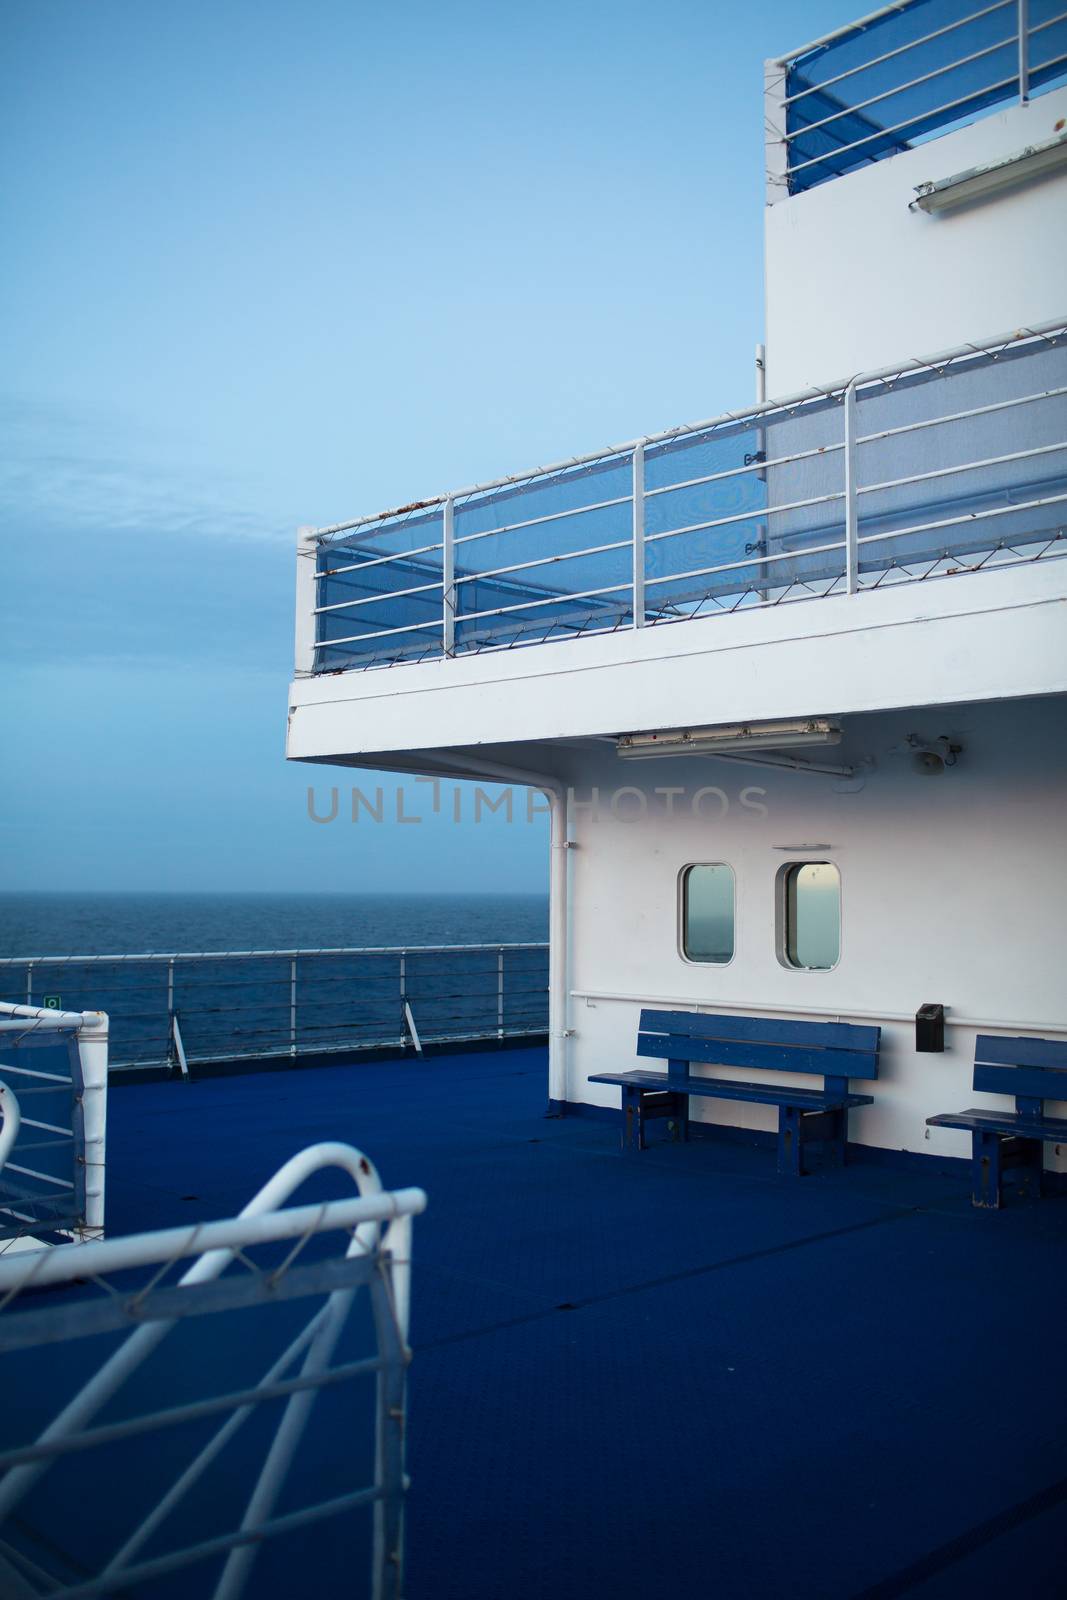 cruise ship by viktor_cap